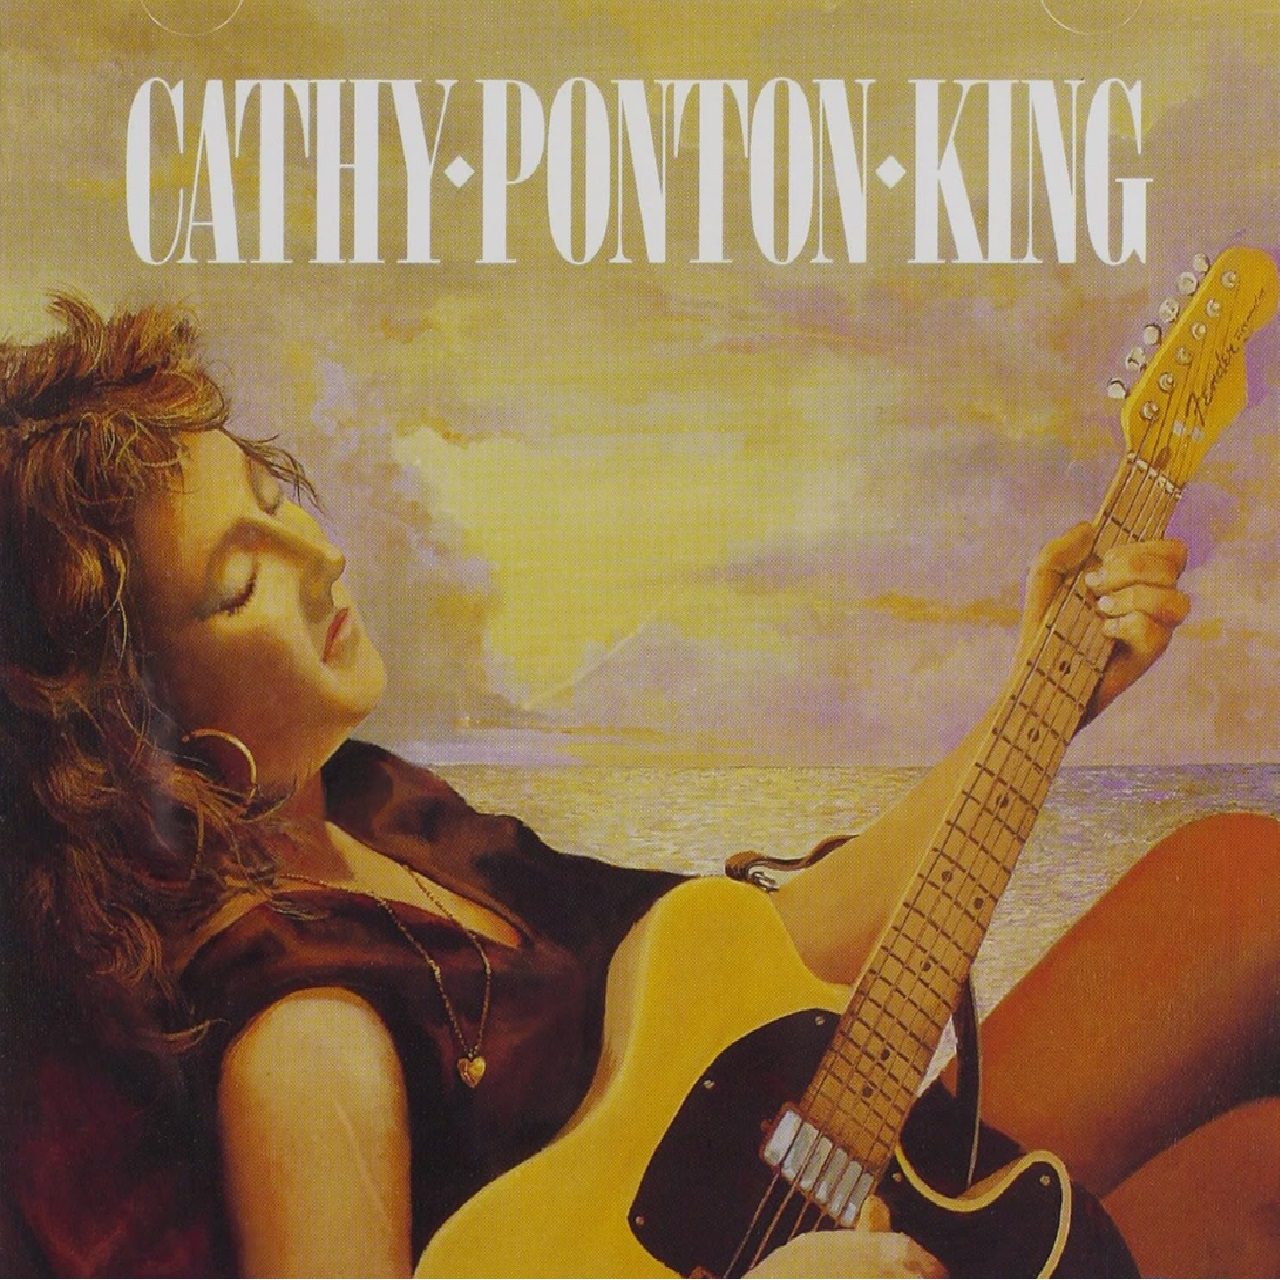 Cathy Ponton King